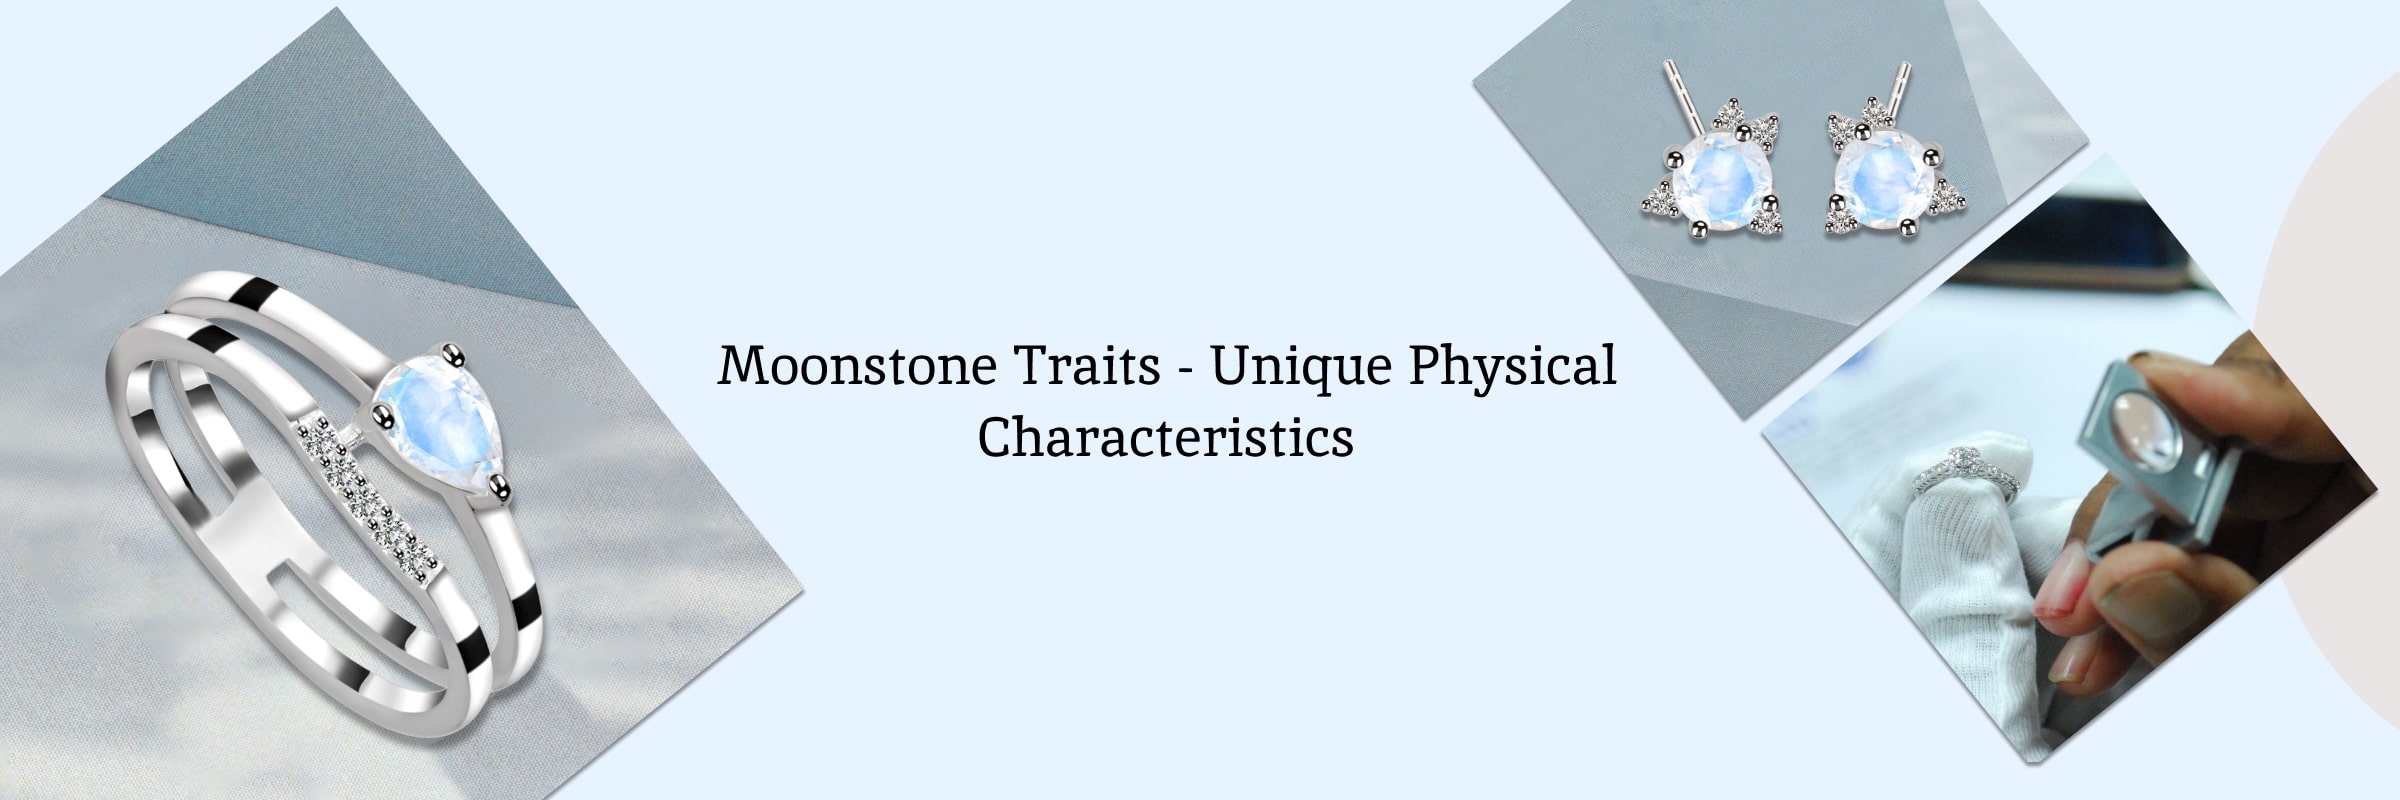 Physical Characteristics of Moonstone